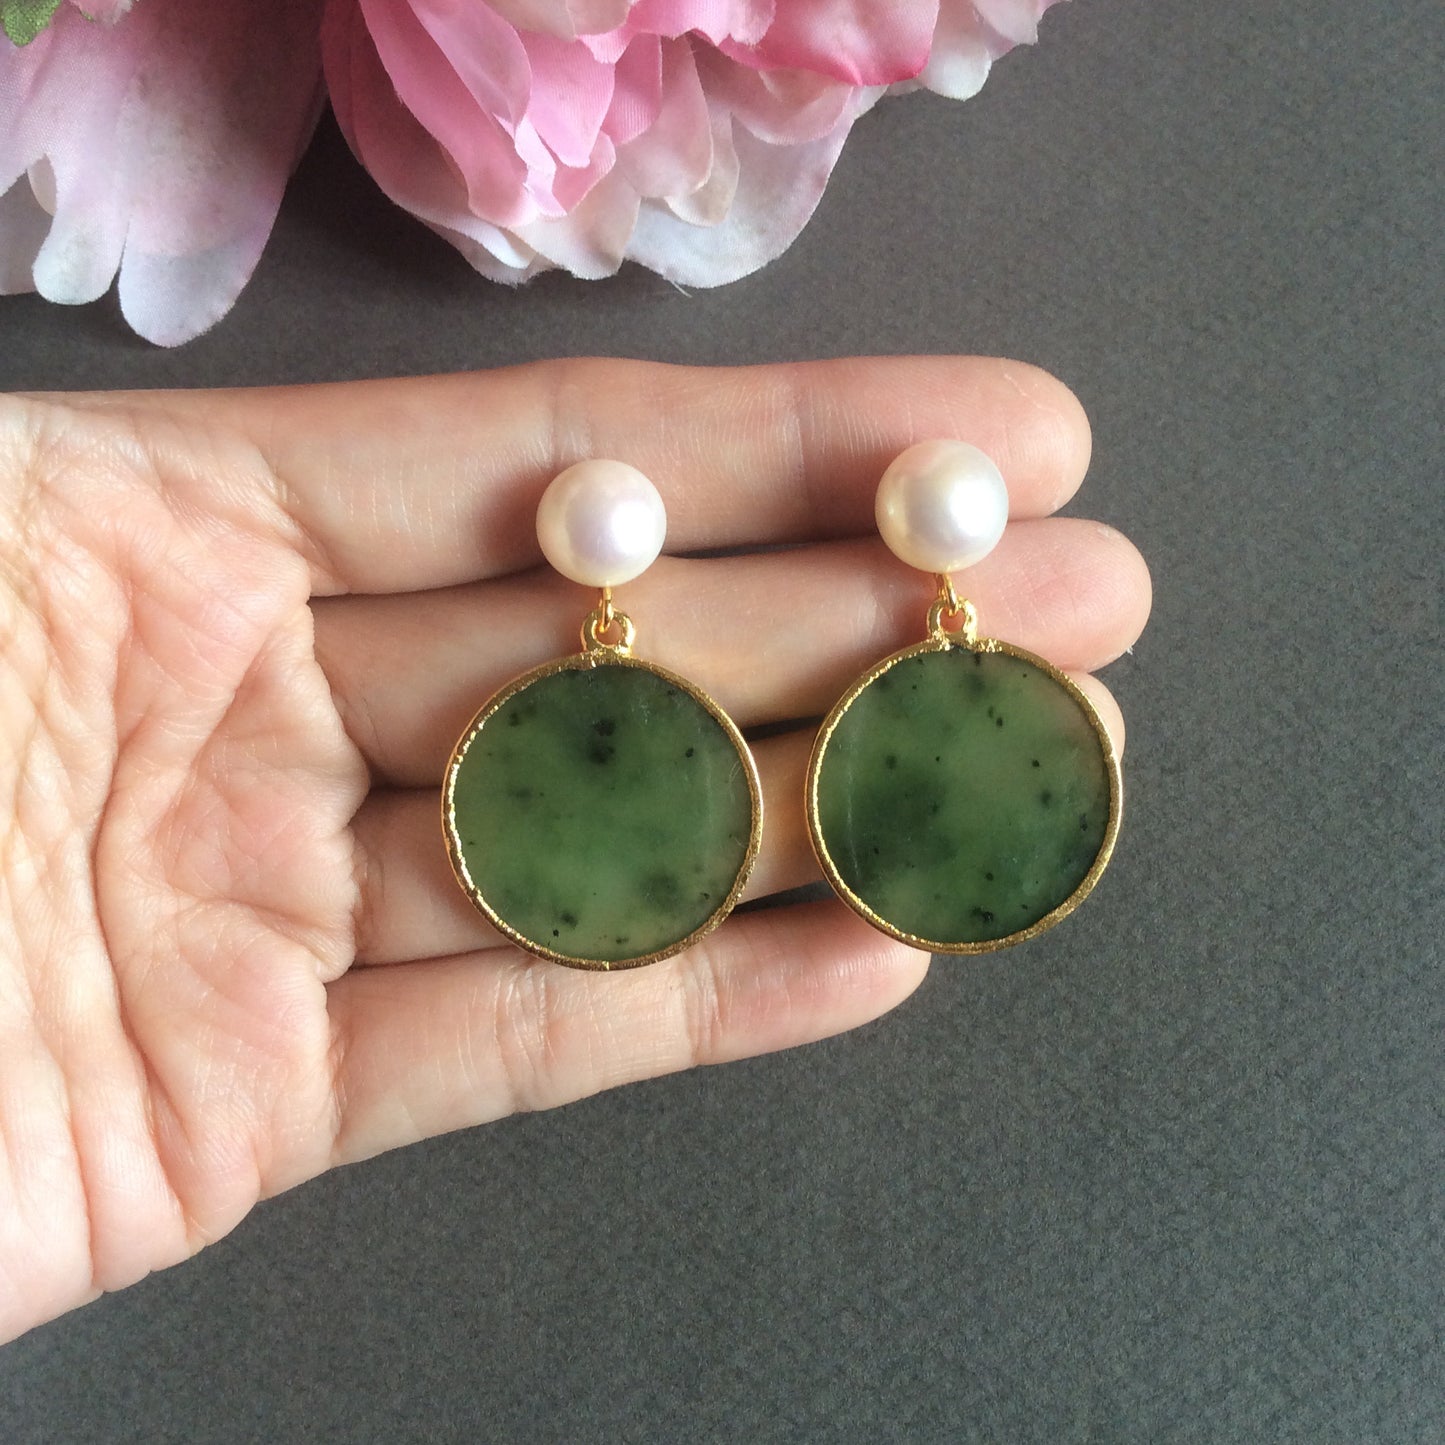 Disc jade earrings with FW pearls